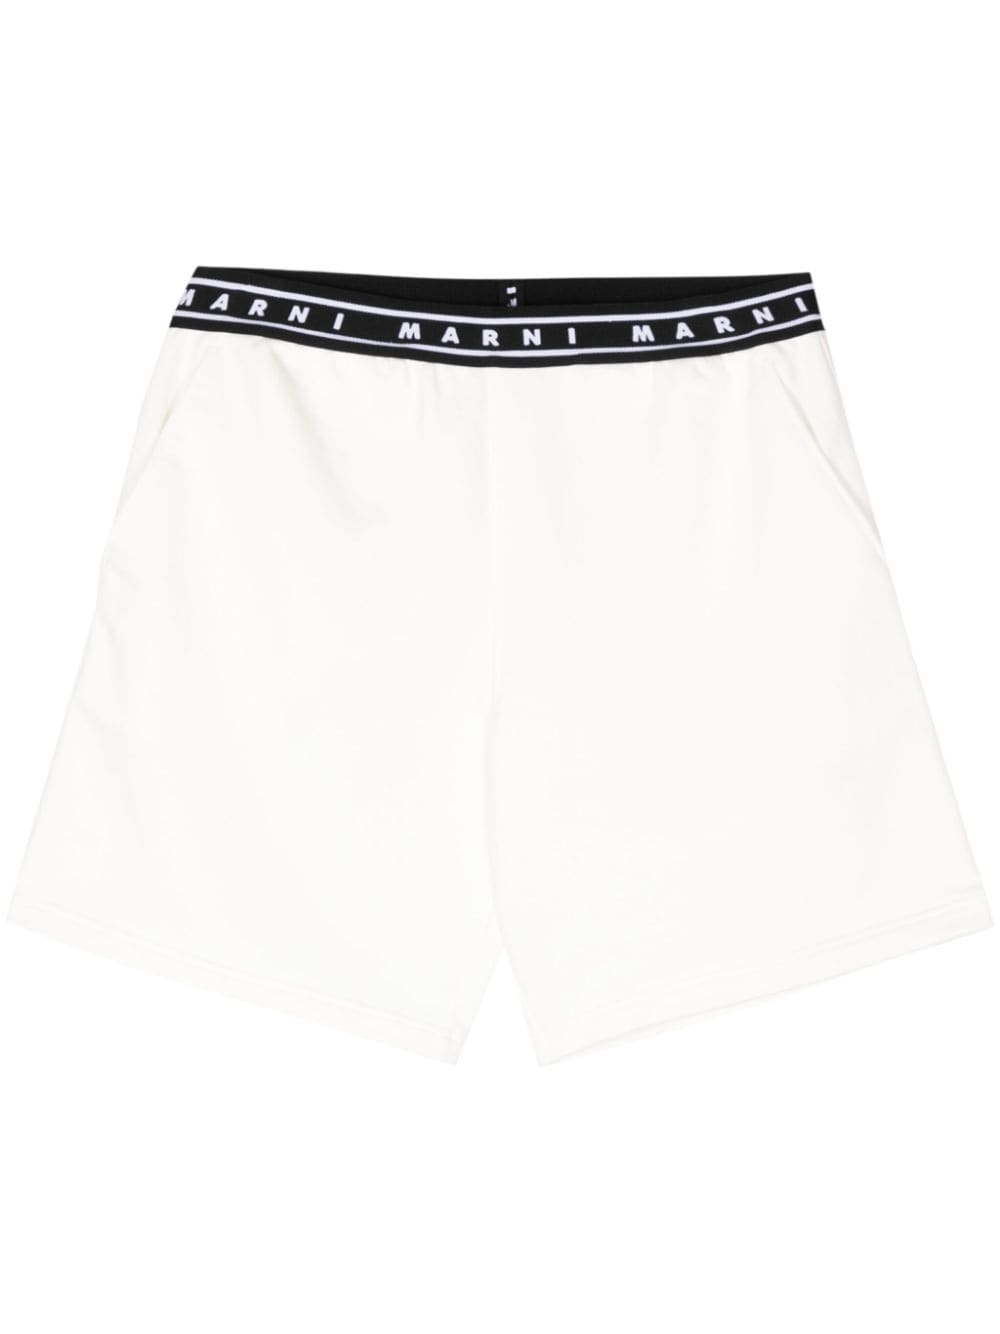 Shorts in cotone con cinturino con stampa logo<br><br><br>